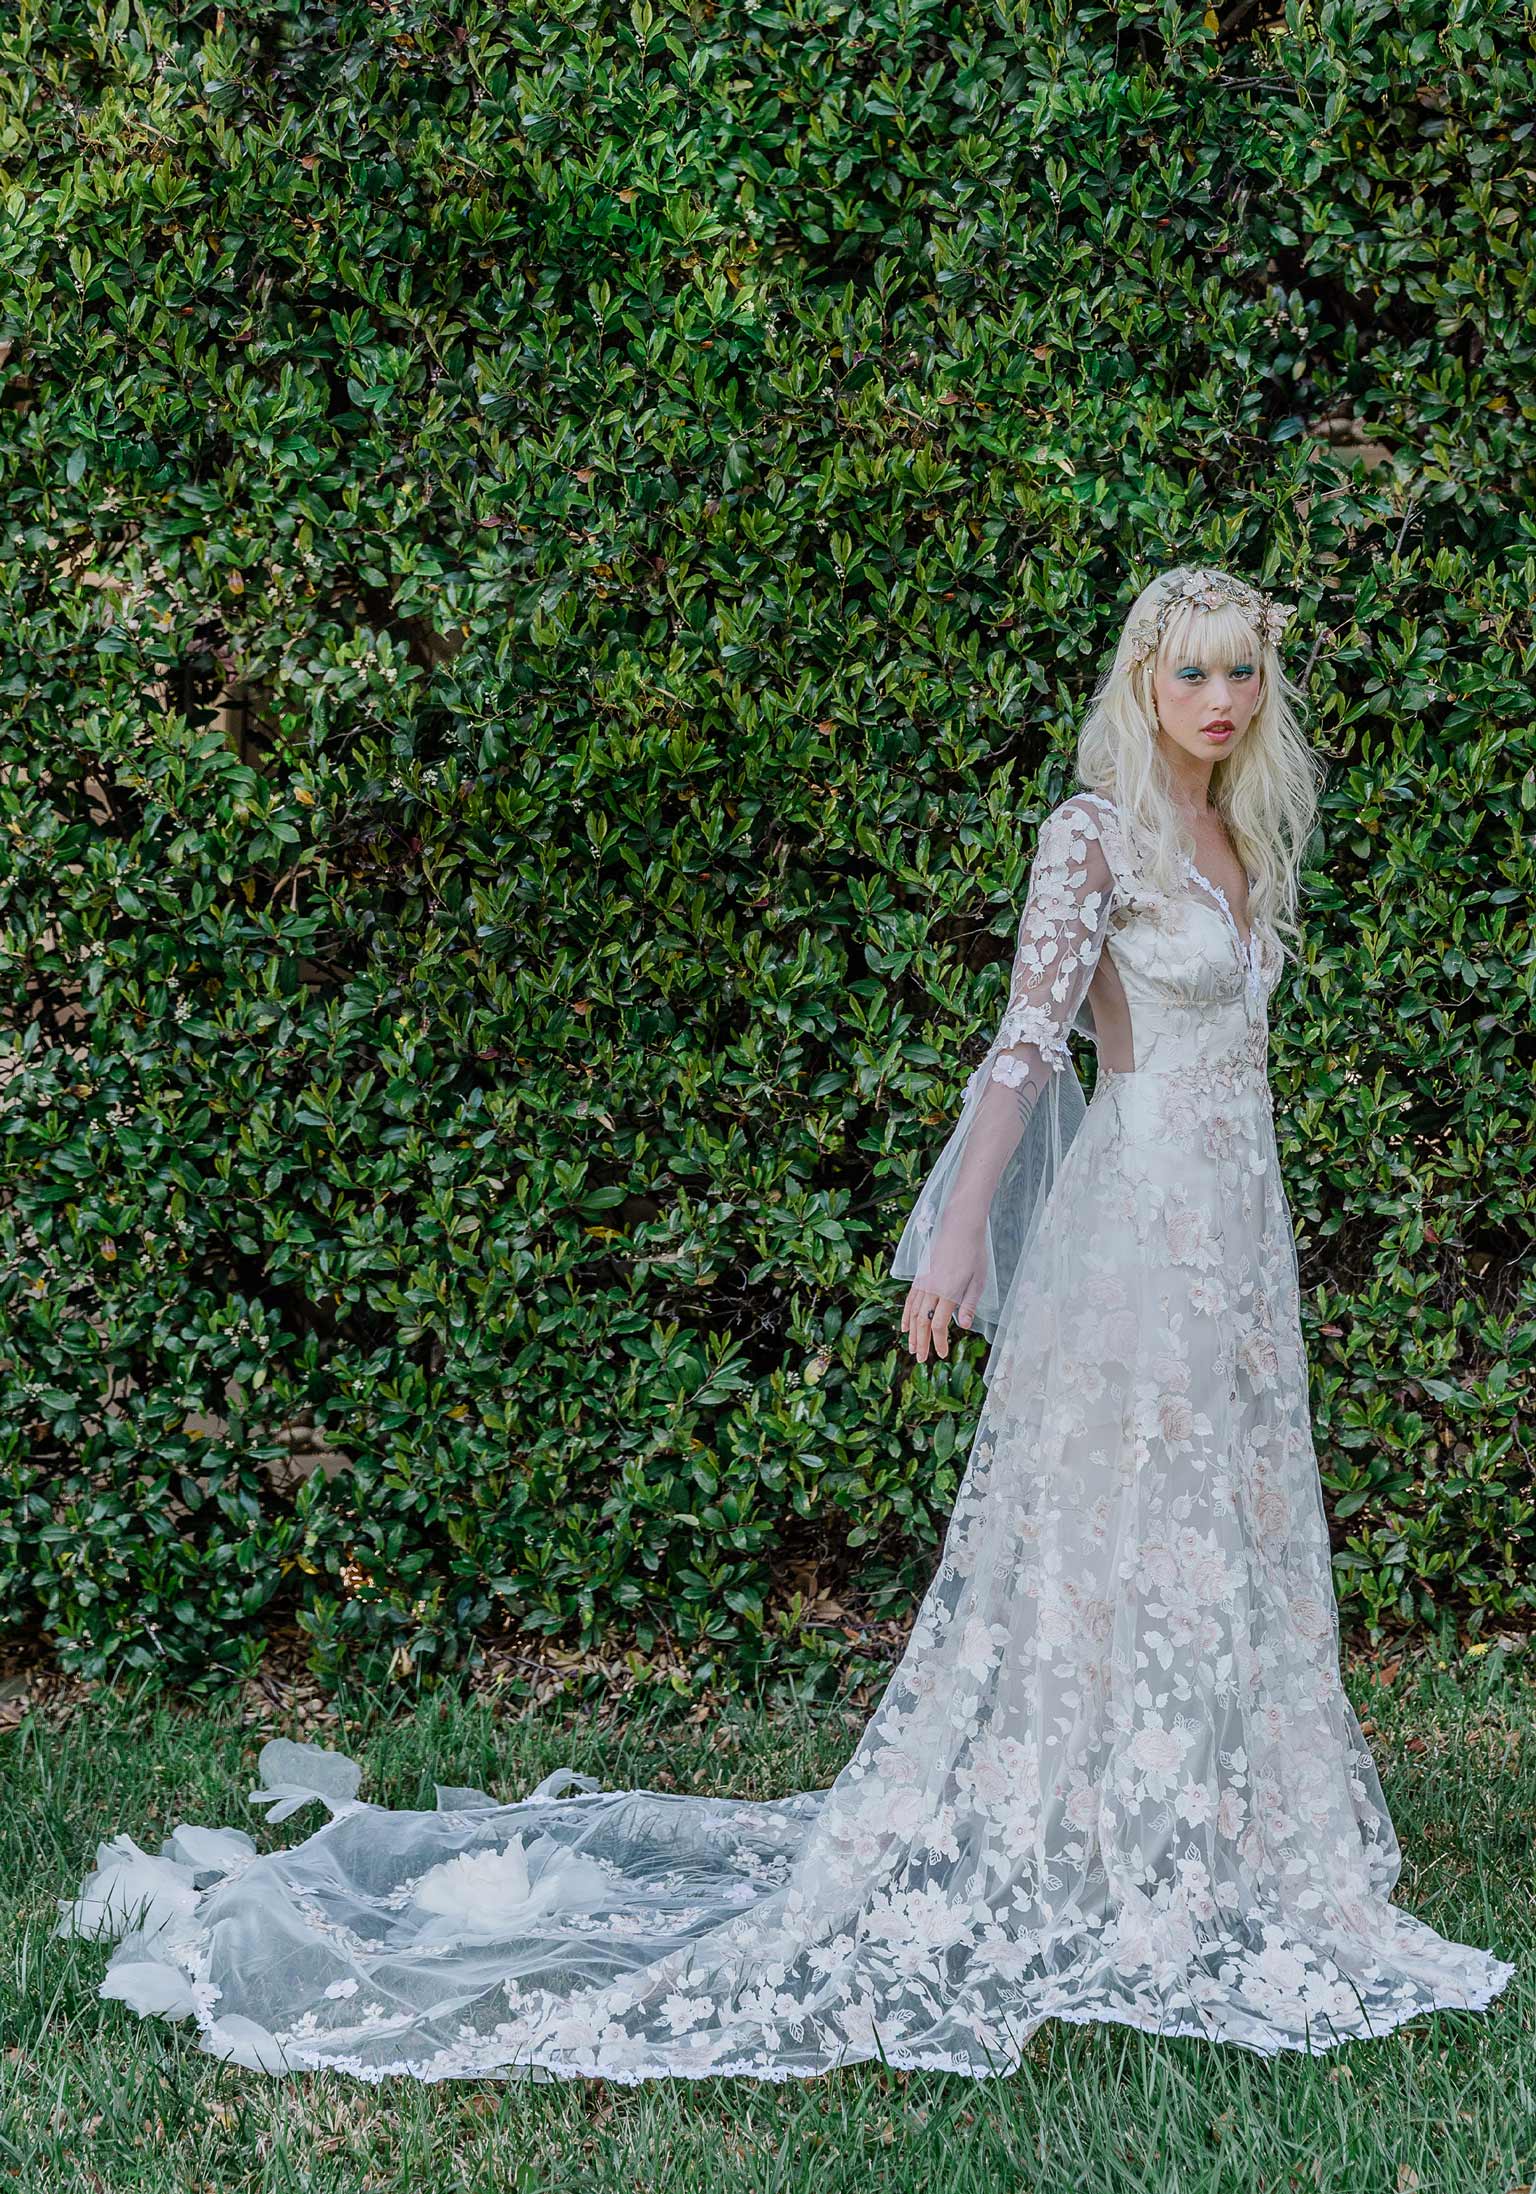 The Cherry Blossom Wedding Dress by Claire Pettibone